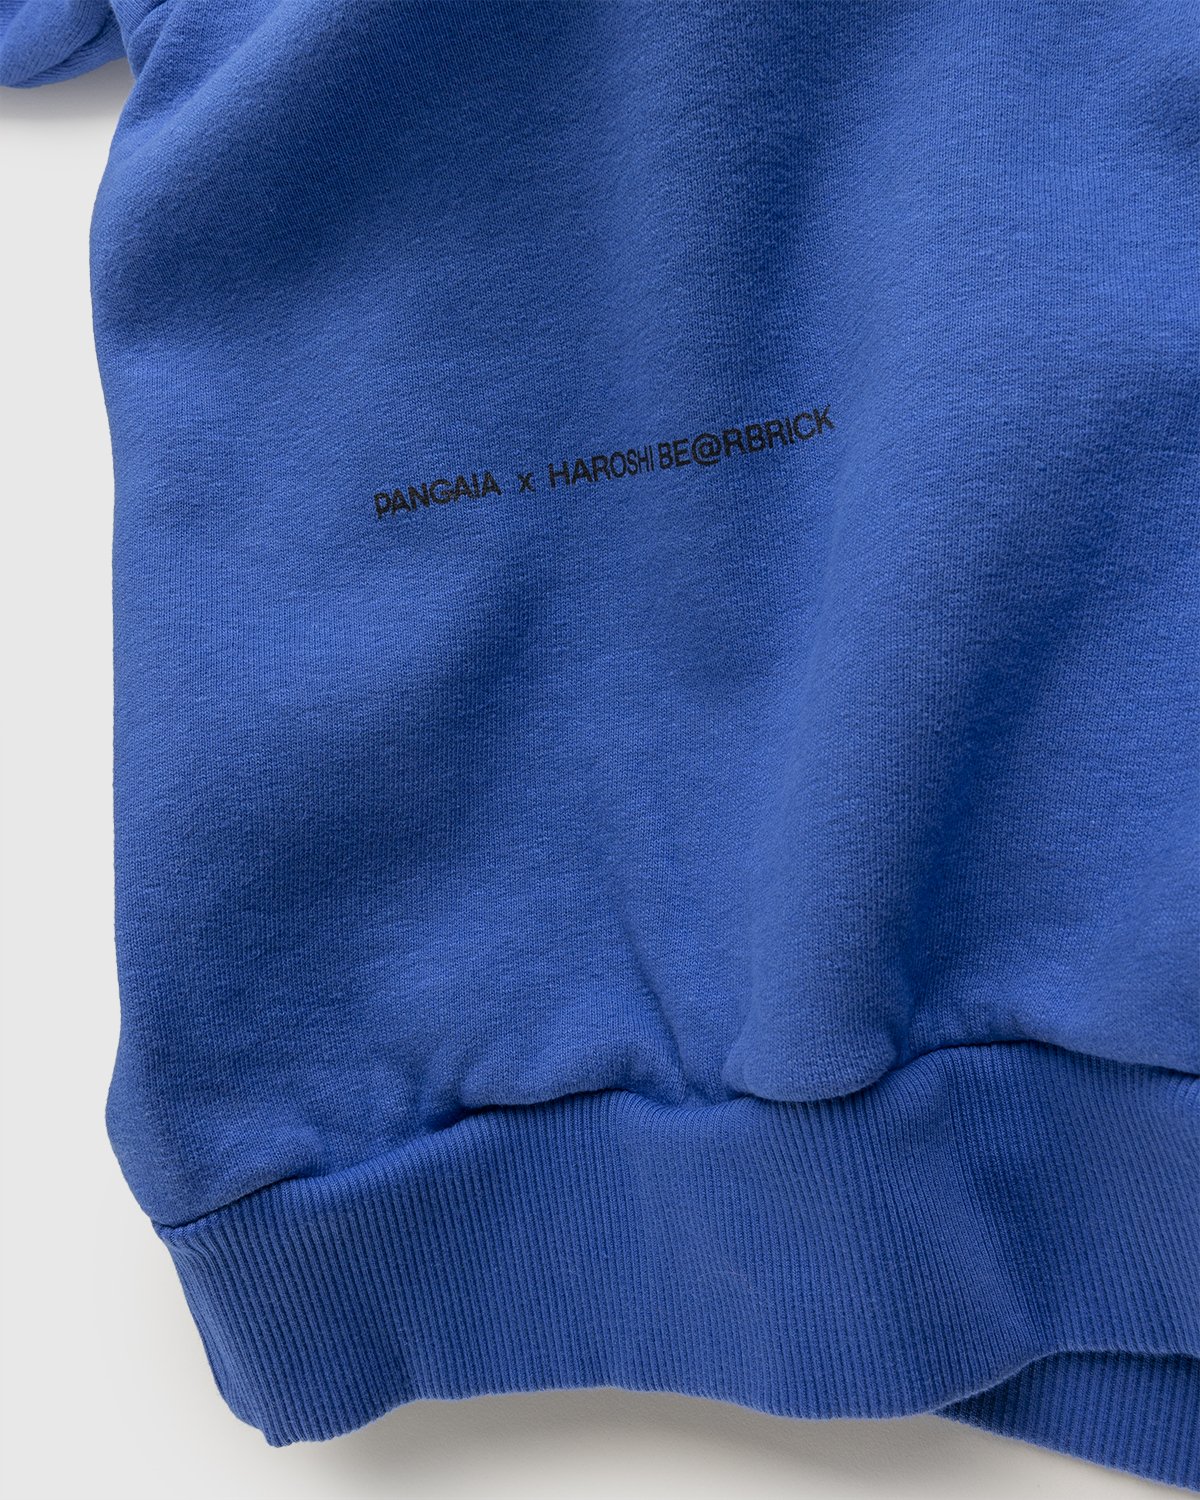 Pangaia x Haroshi - Be@rbrick Recycled Cotton Hoodie Blue - Clothing - Blue - Image 4